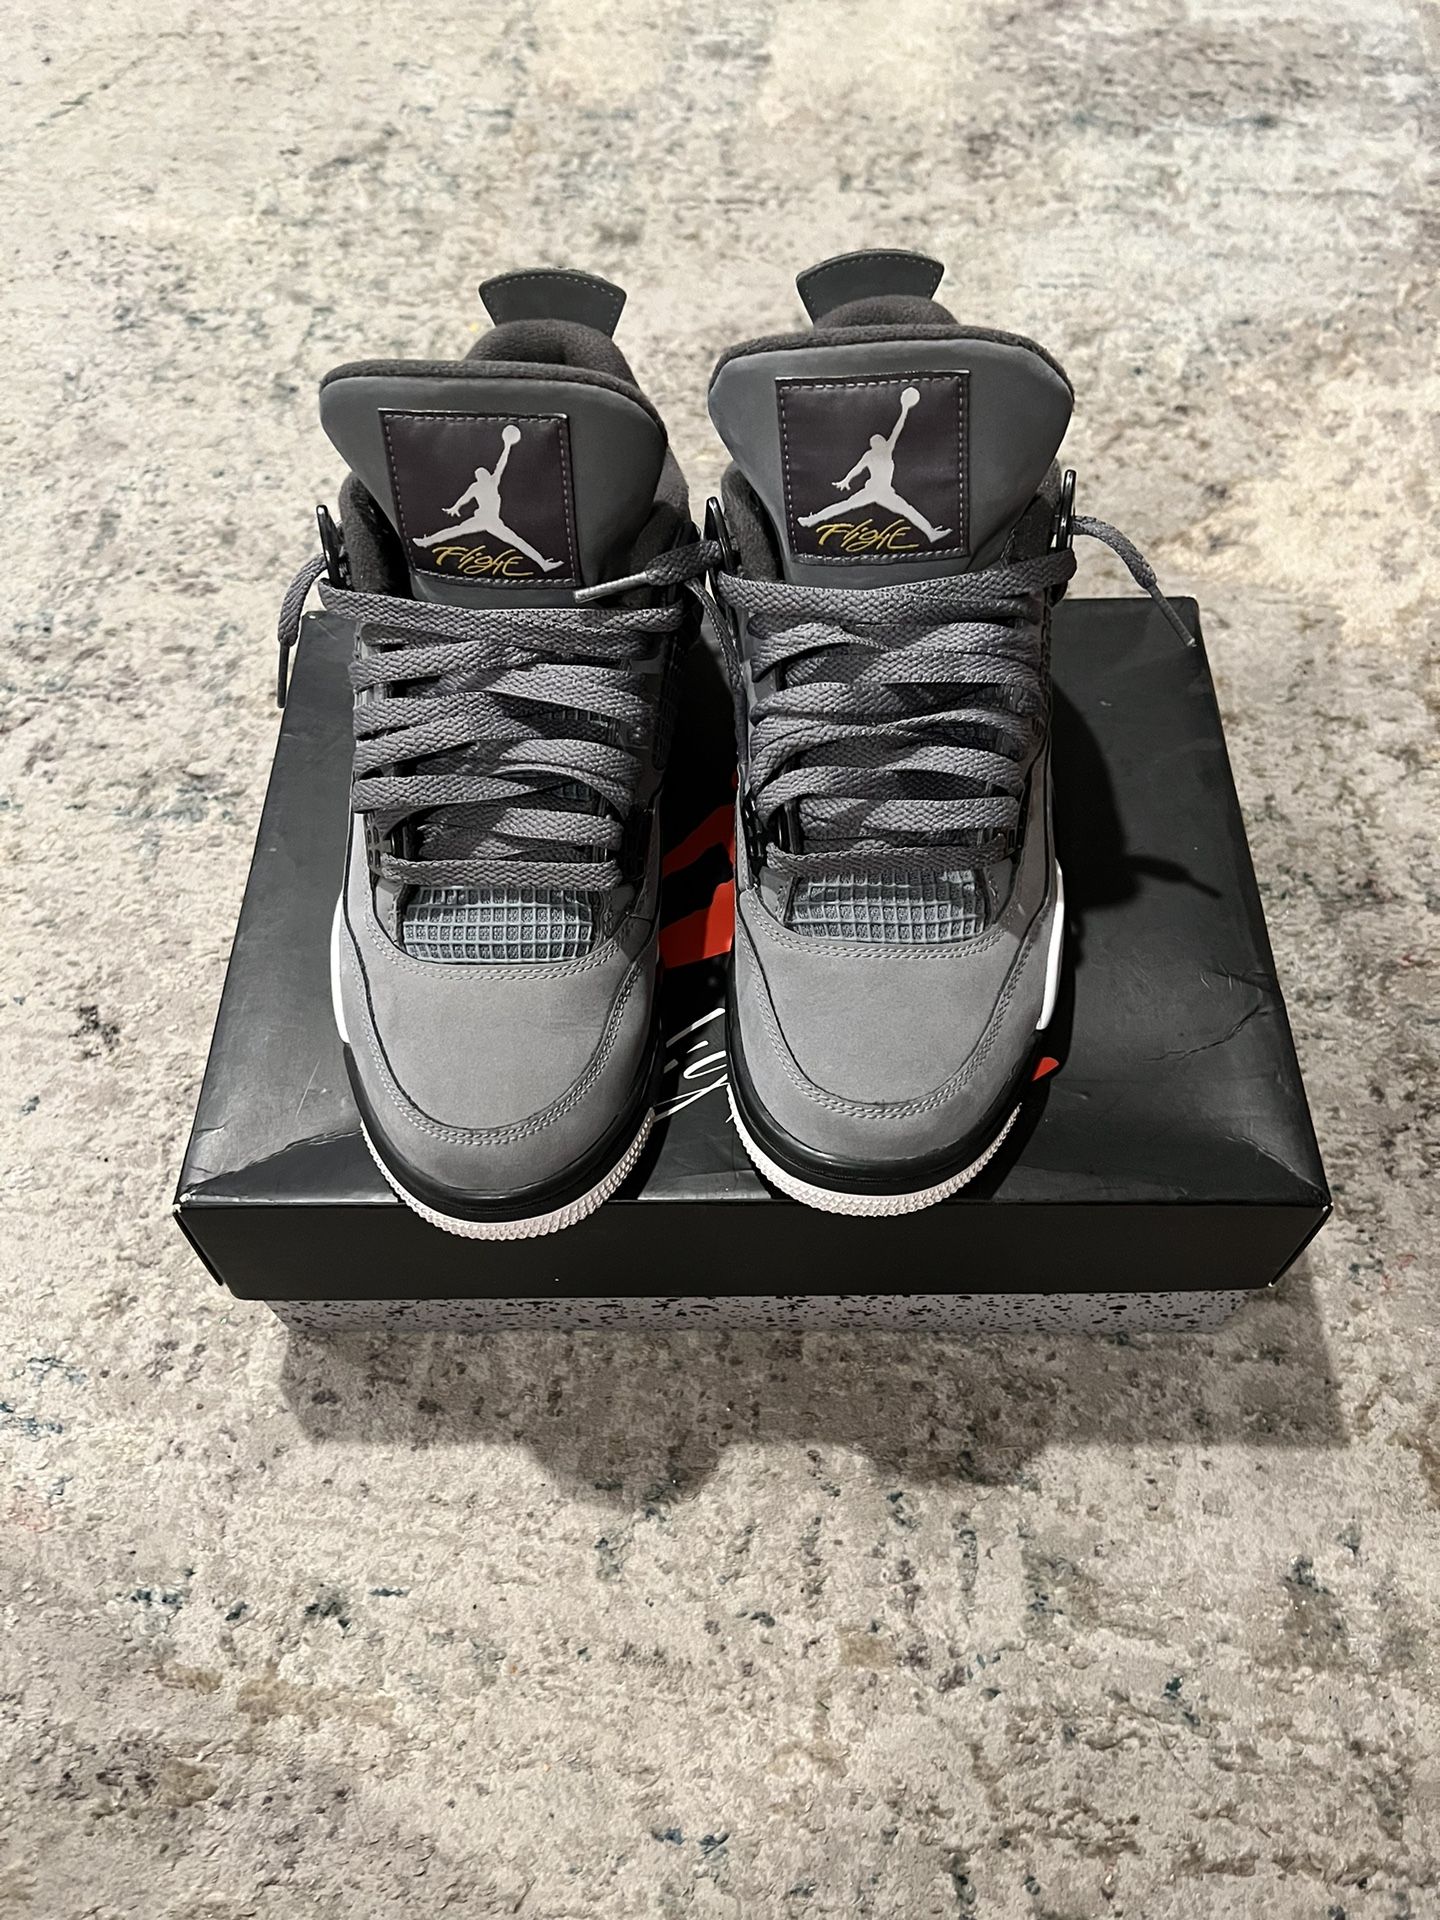 Jordan 4 Cool Grey 2019 Size 8